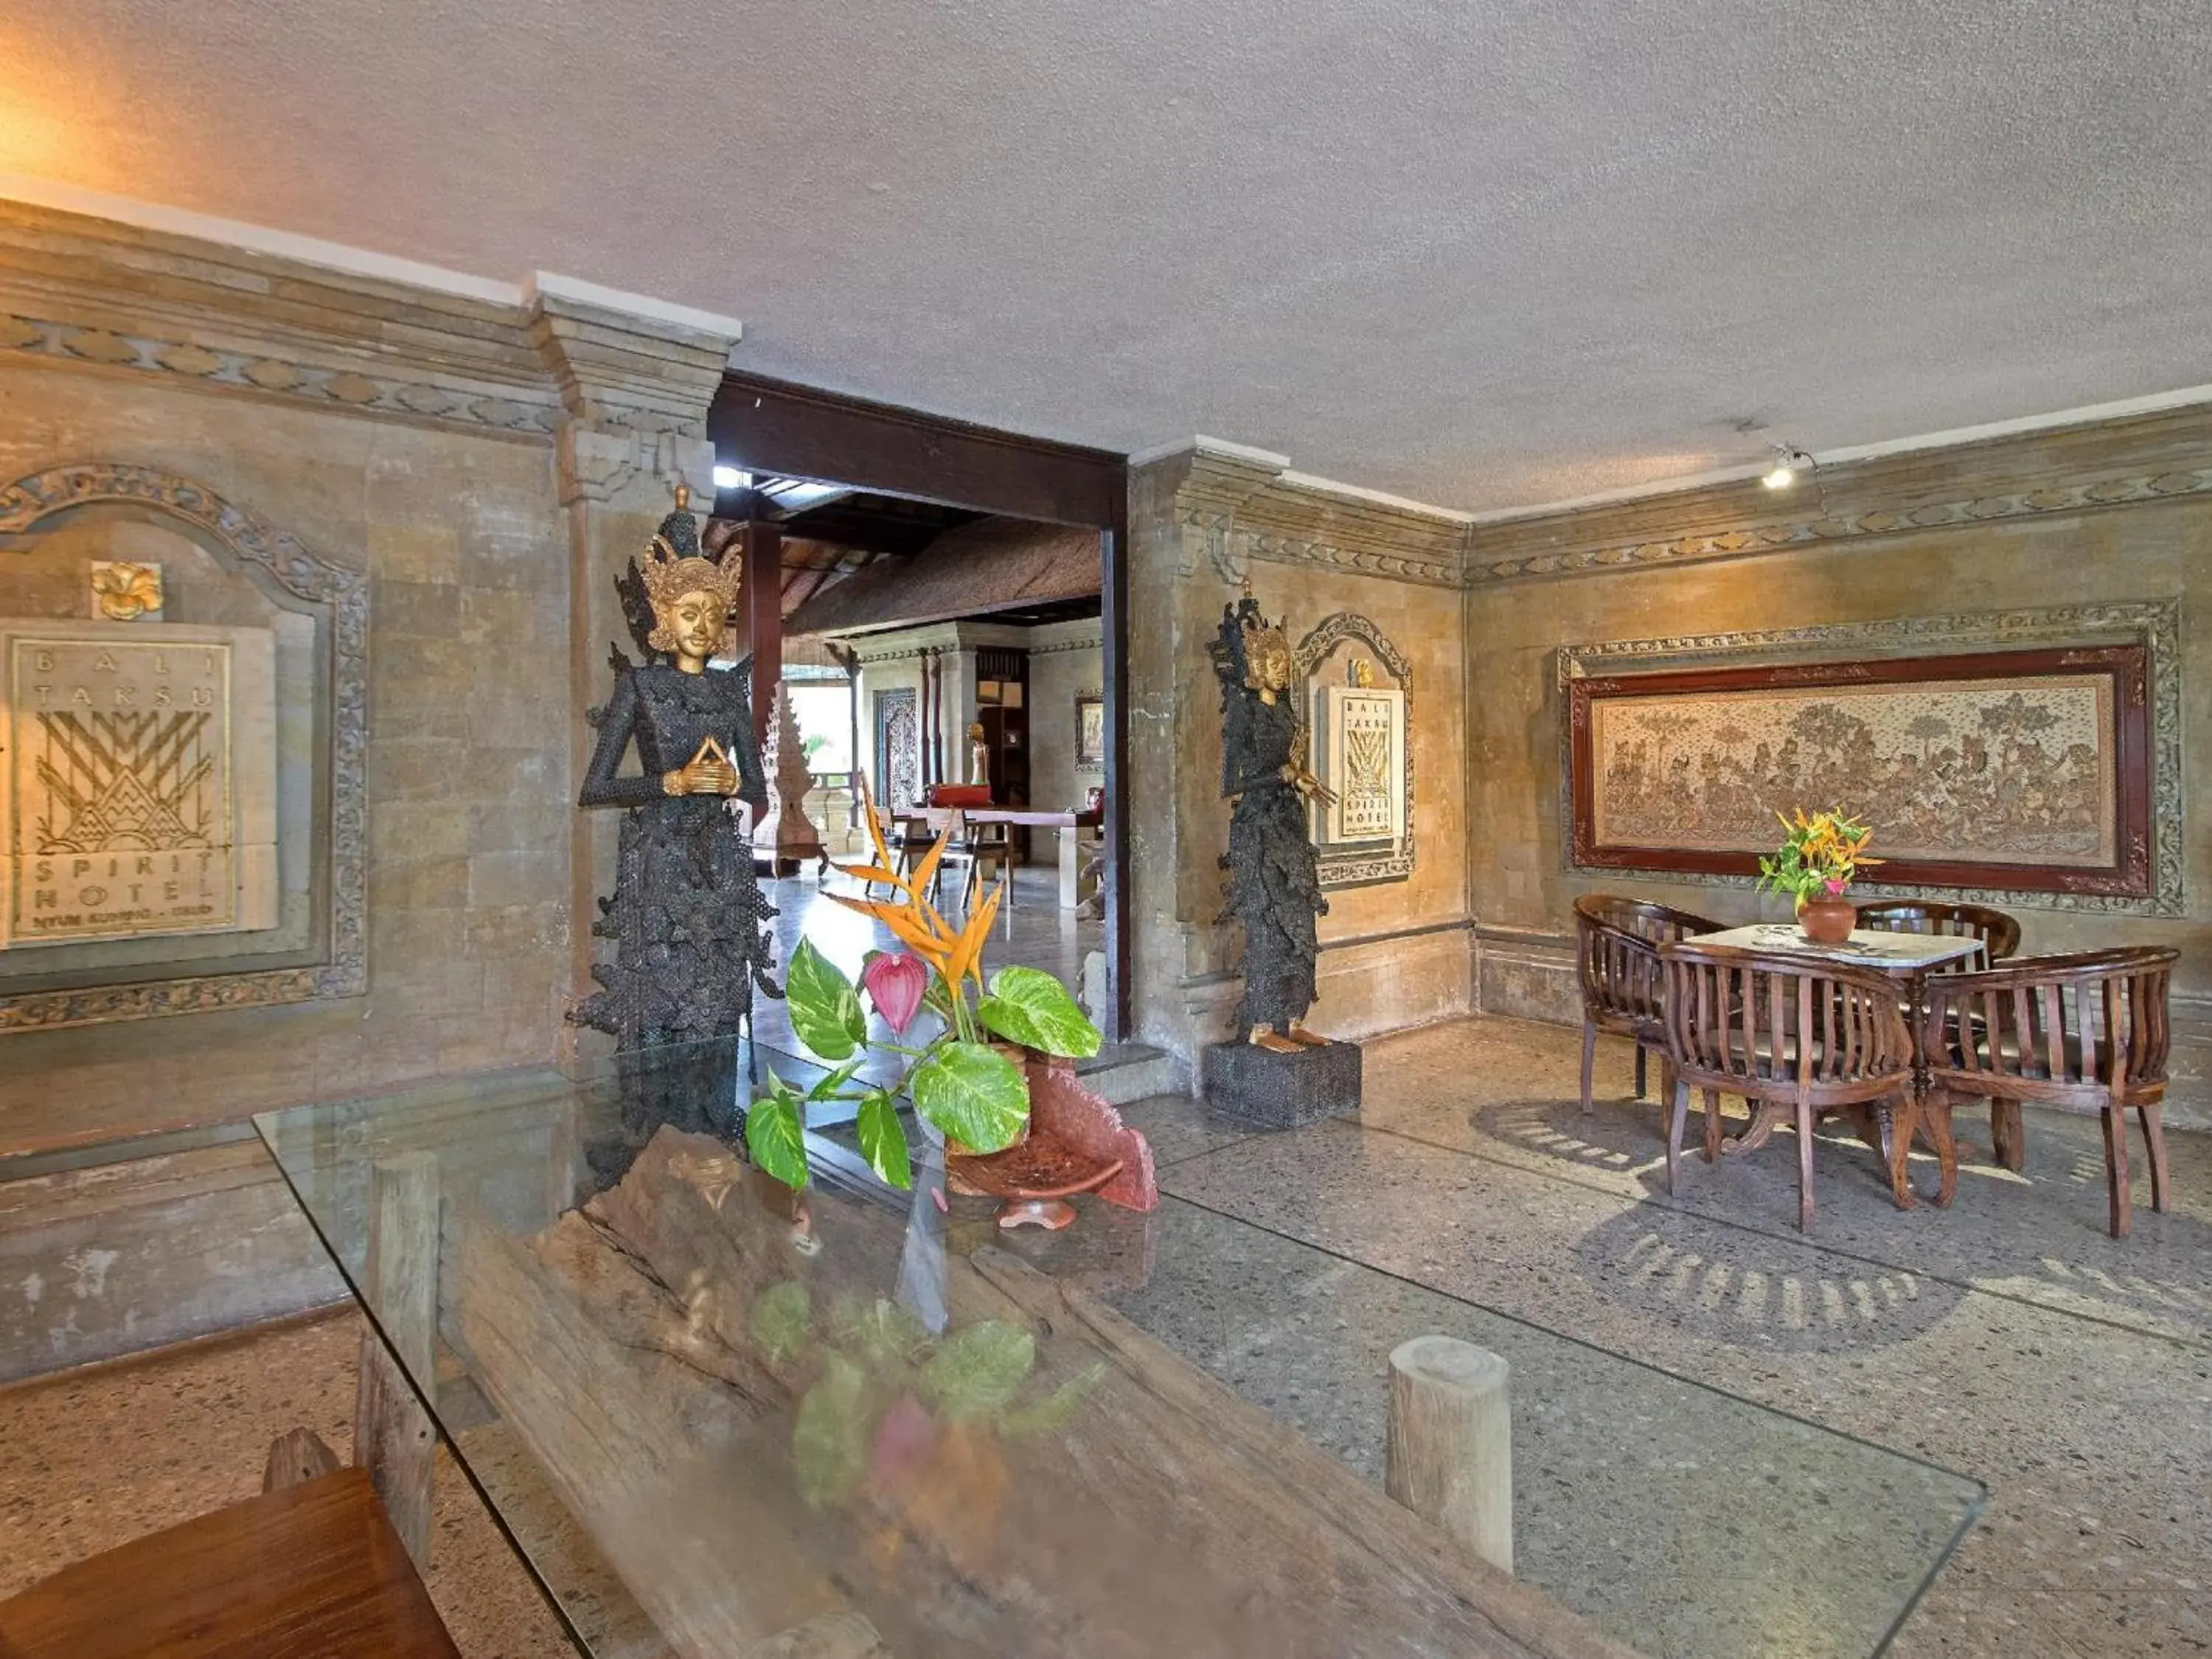 Lobby or reception in Bali Spirit Hotel and Spa, Ubud